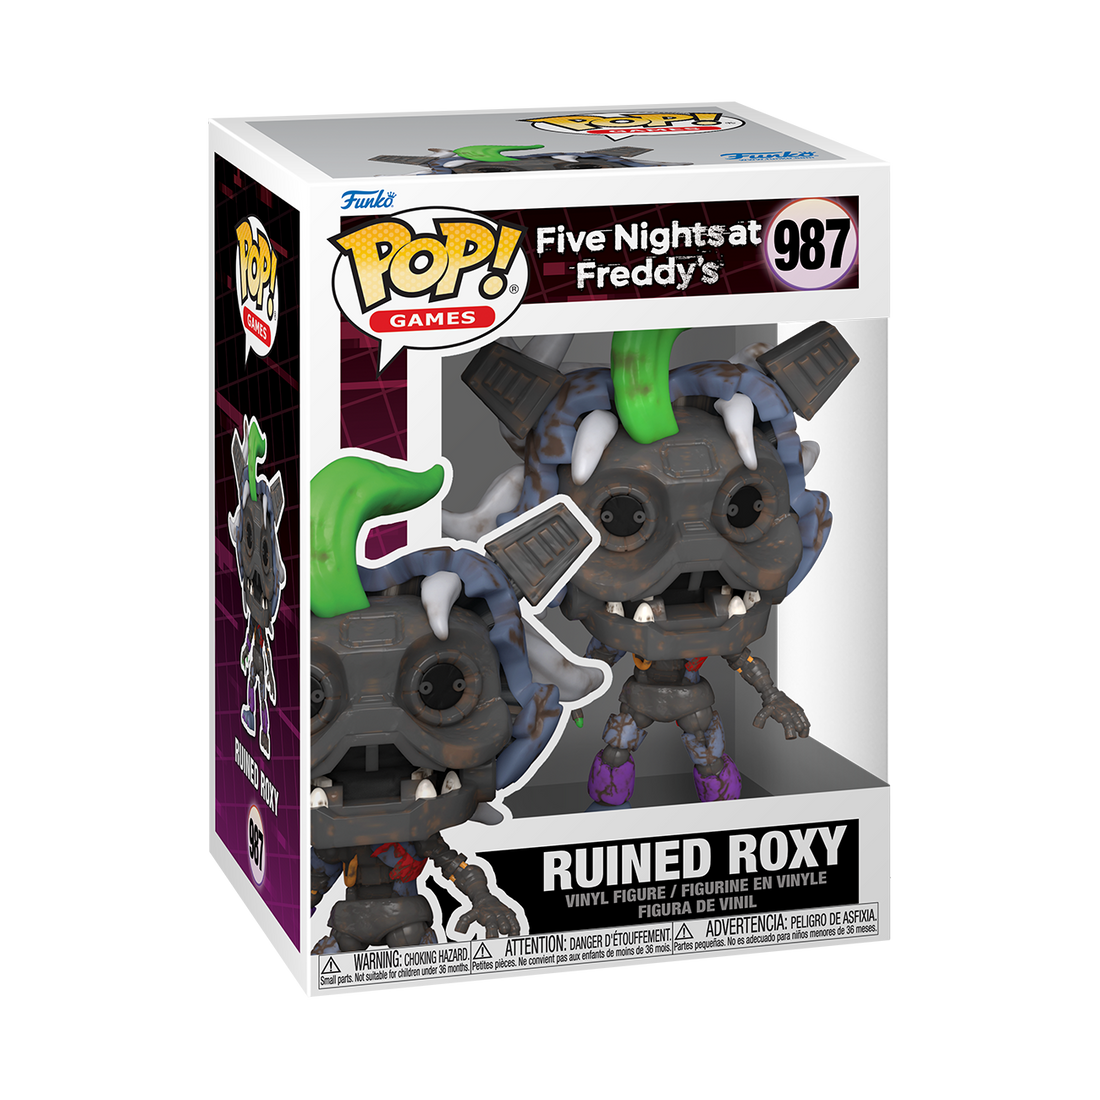 Funko Pop! Games Five Nights at Freddy's 987 Ruined Roxy Funko